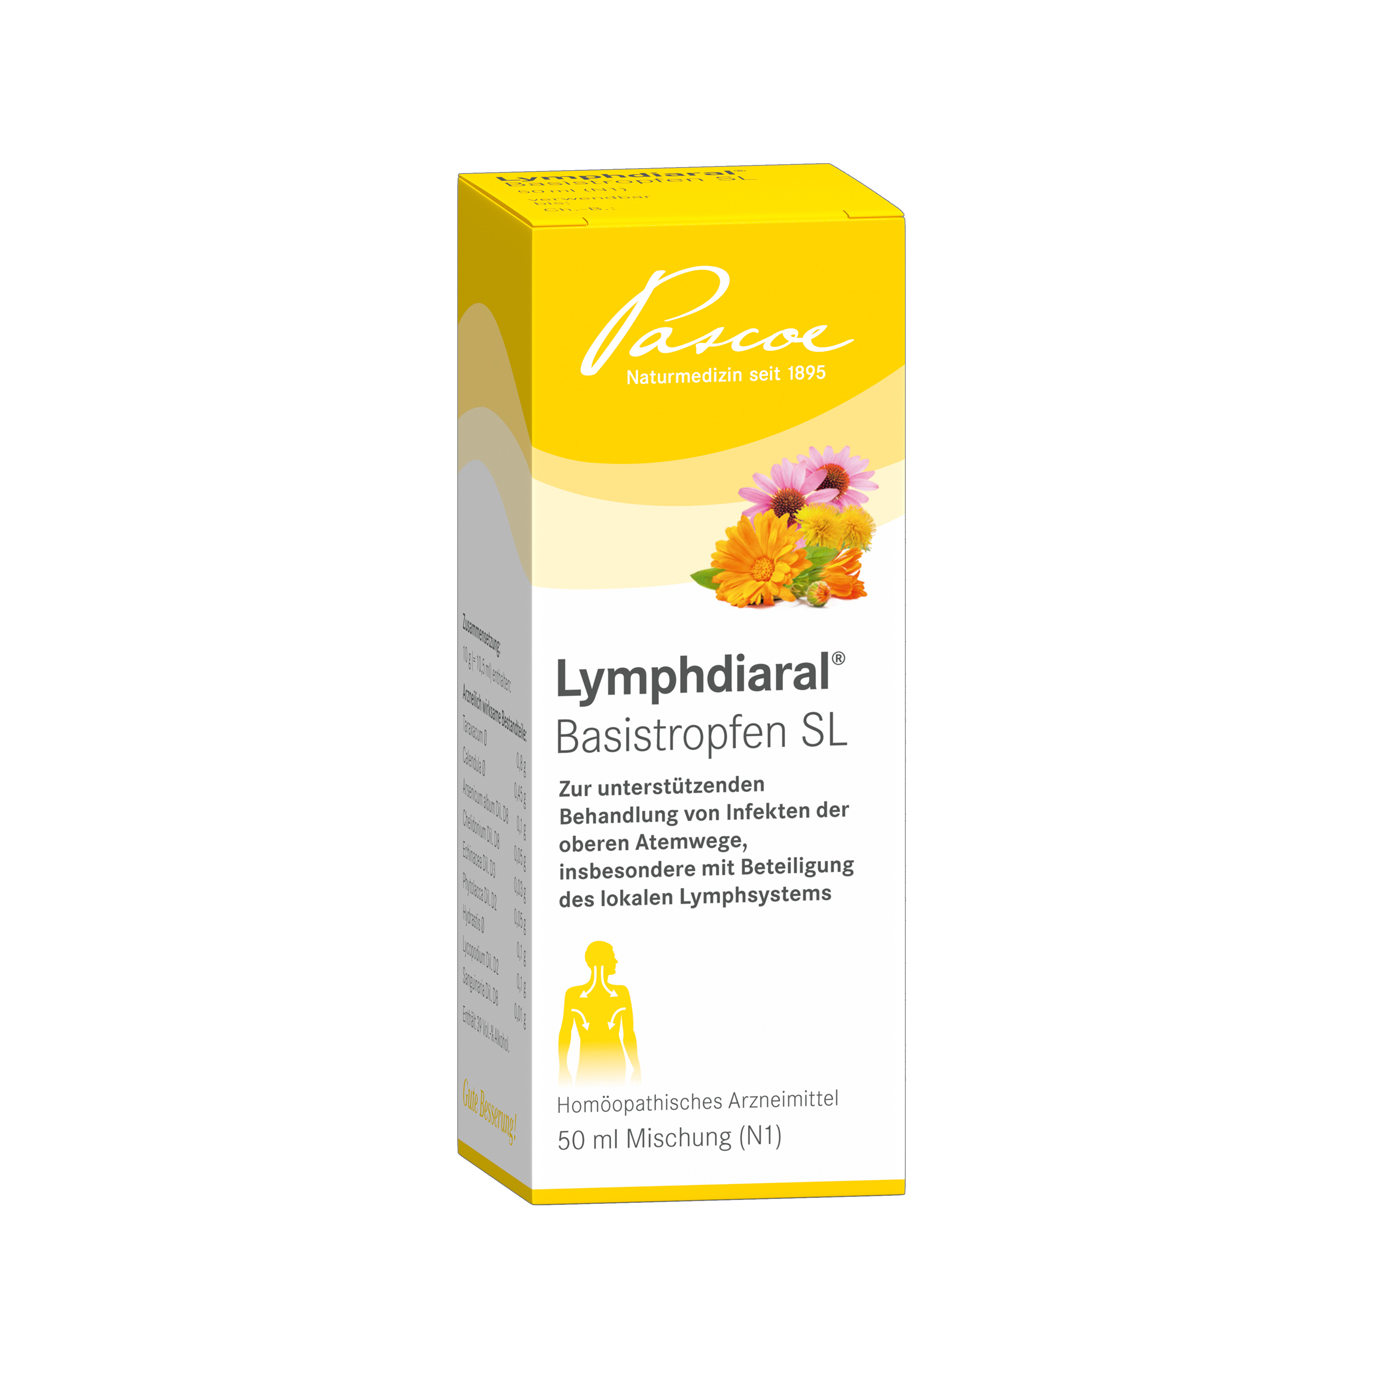 Lymphdiaral 50 ml Basistropfen Packshot PZN 03897999